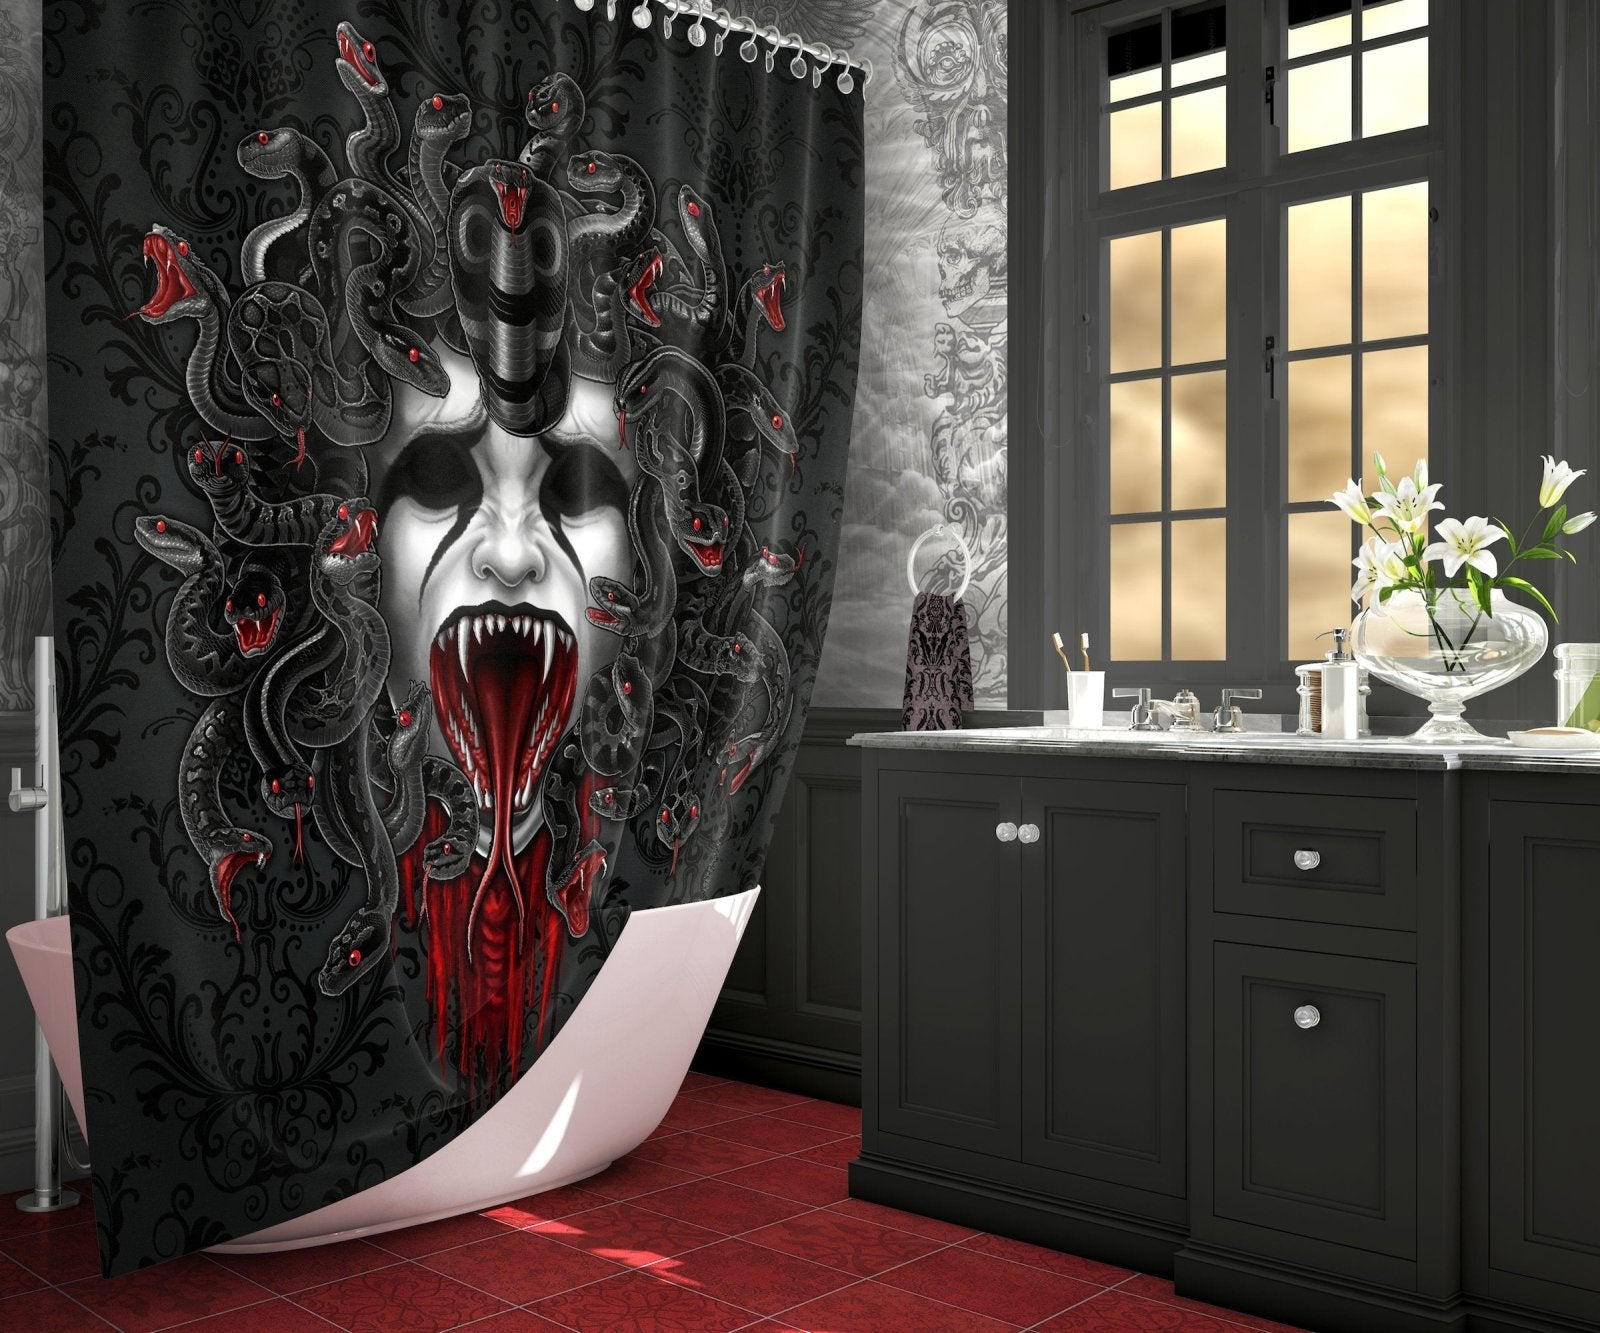 Gothic Shower Curtain, Halloween and Horror Bathroom Decor, Nu Goth Art - Screaming Medusa & Skull, Black & Black Snakes - Abysm Internal